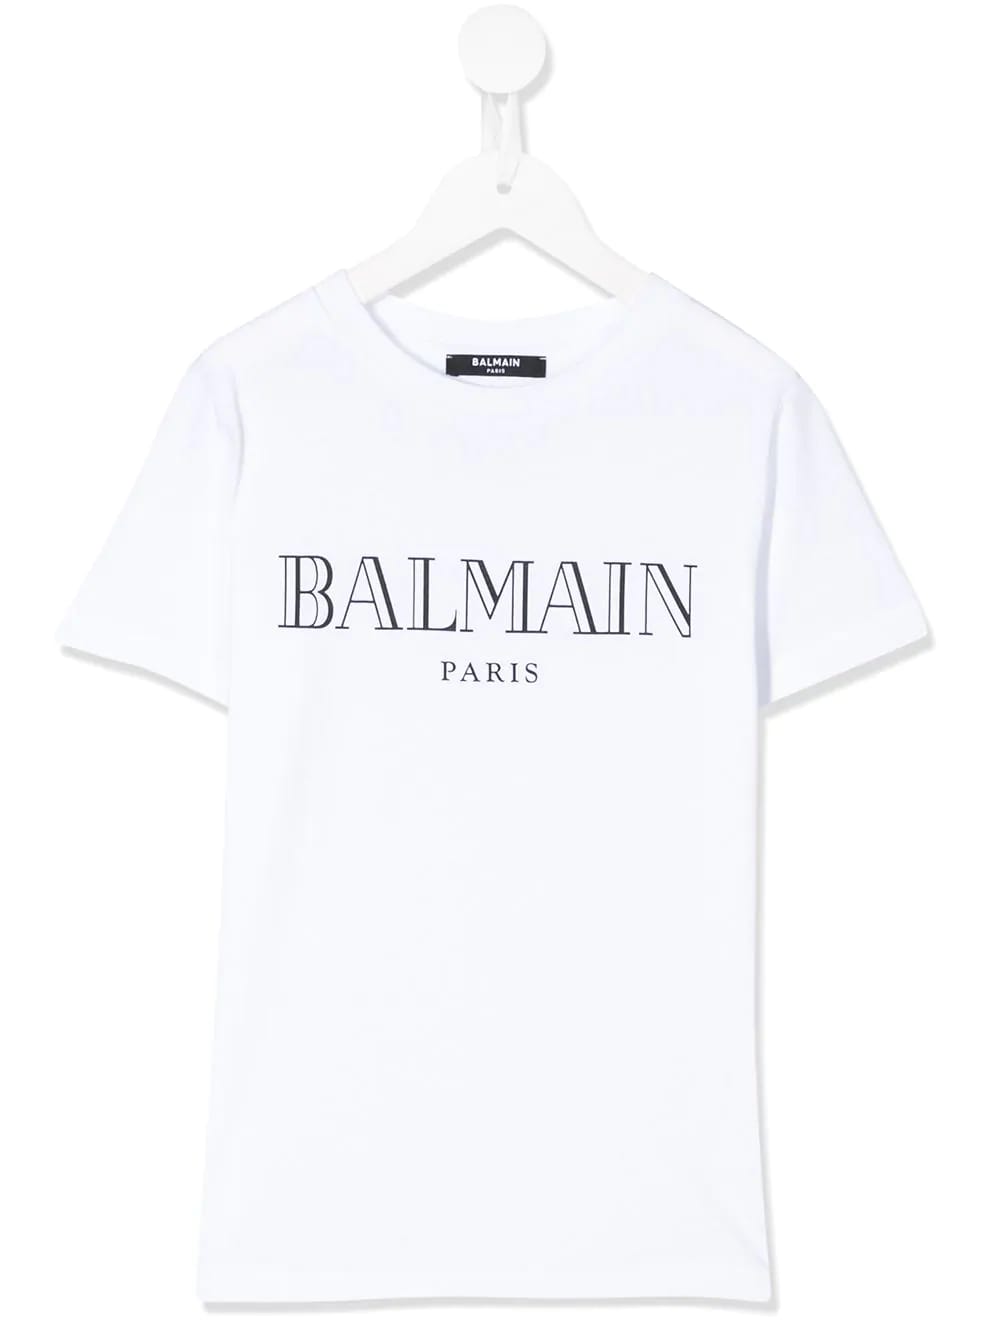 Balmain Unisex Kid White T-shirt With Black Logo | ModeSens